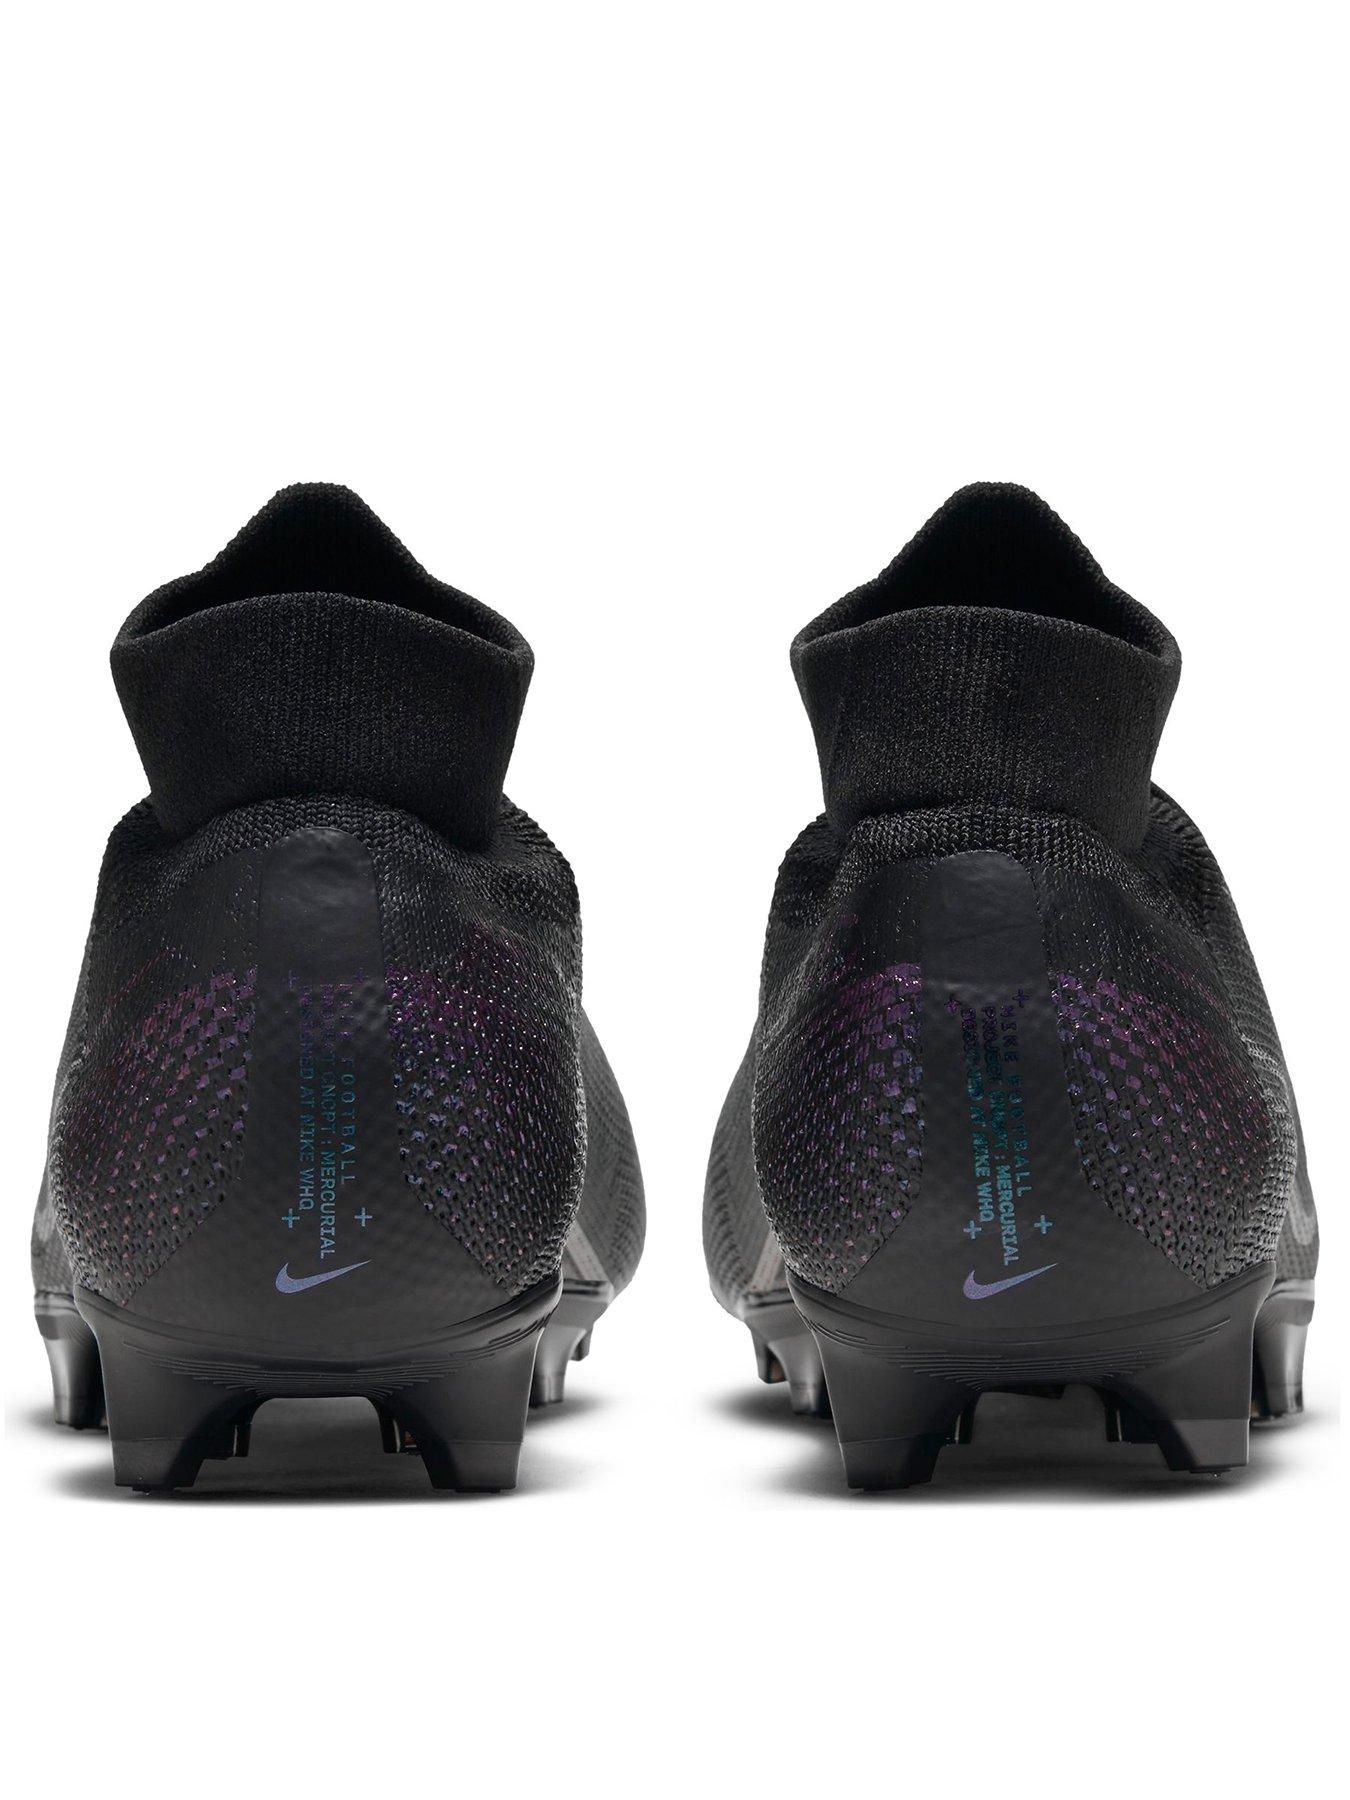 Nike Mercurial Superfly 6 Pro FG Men Soccer Cleats Black.